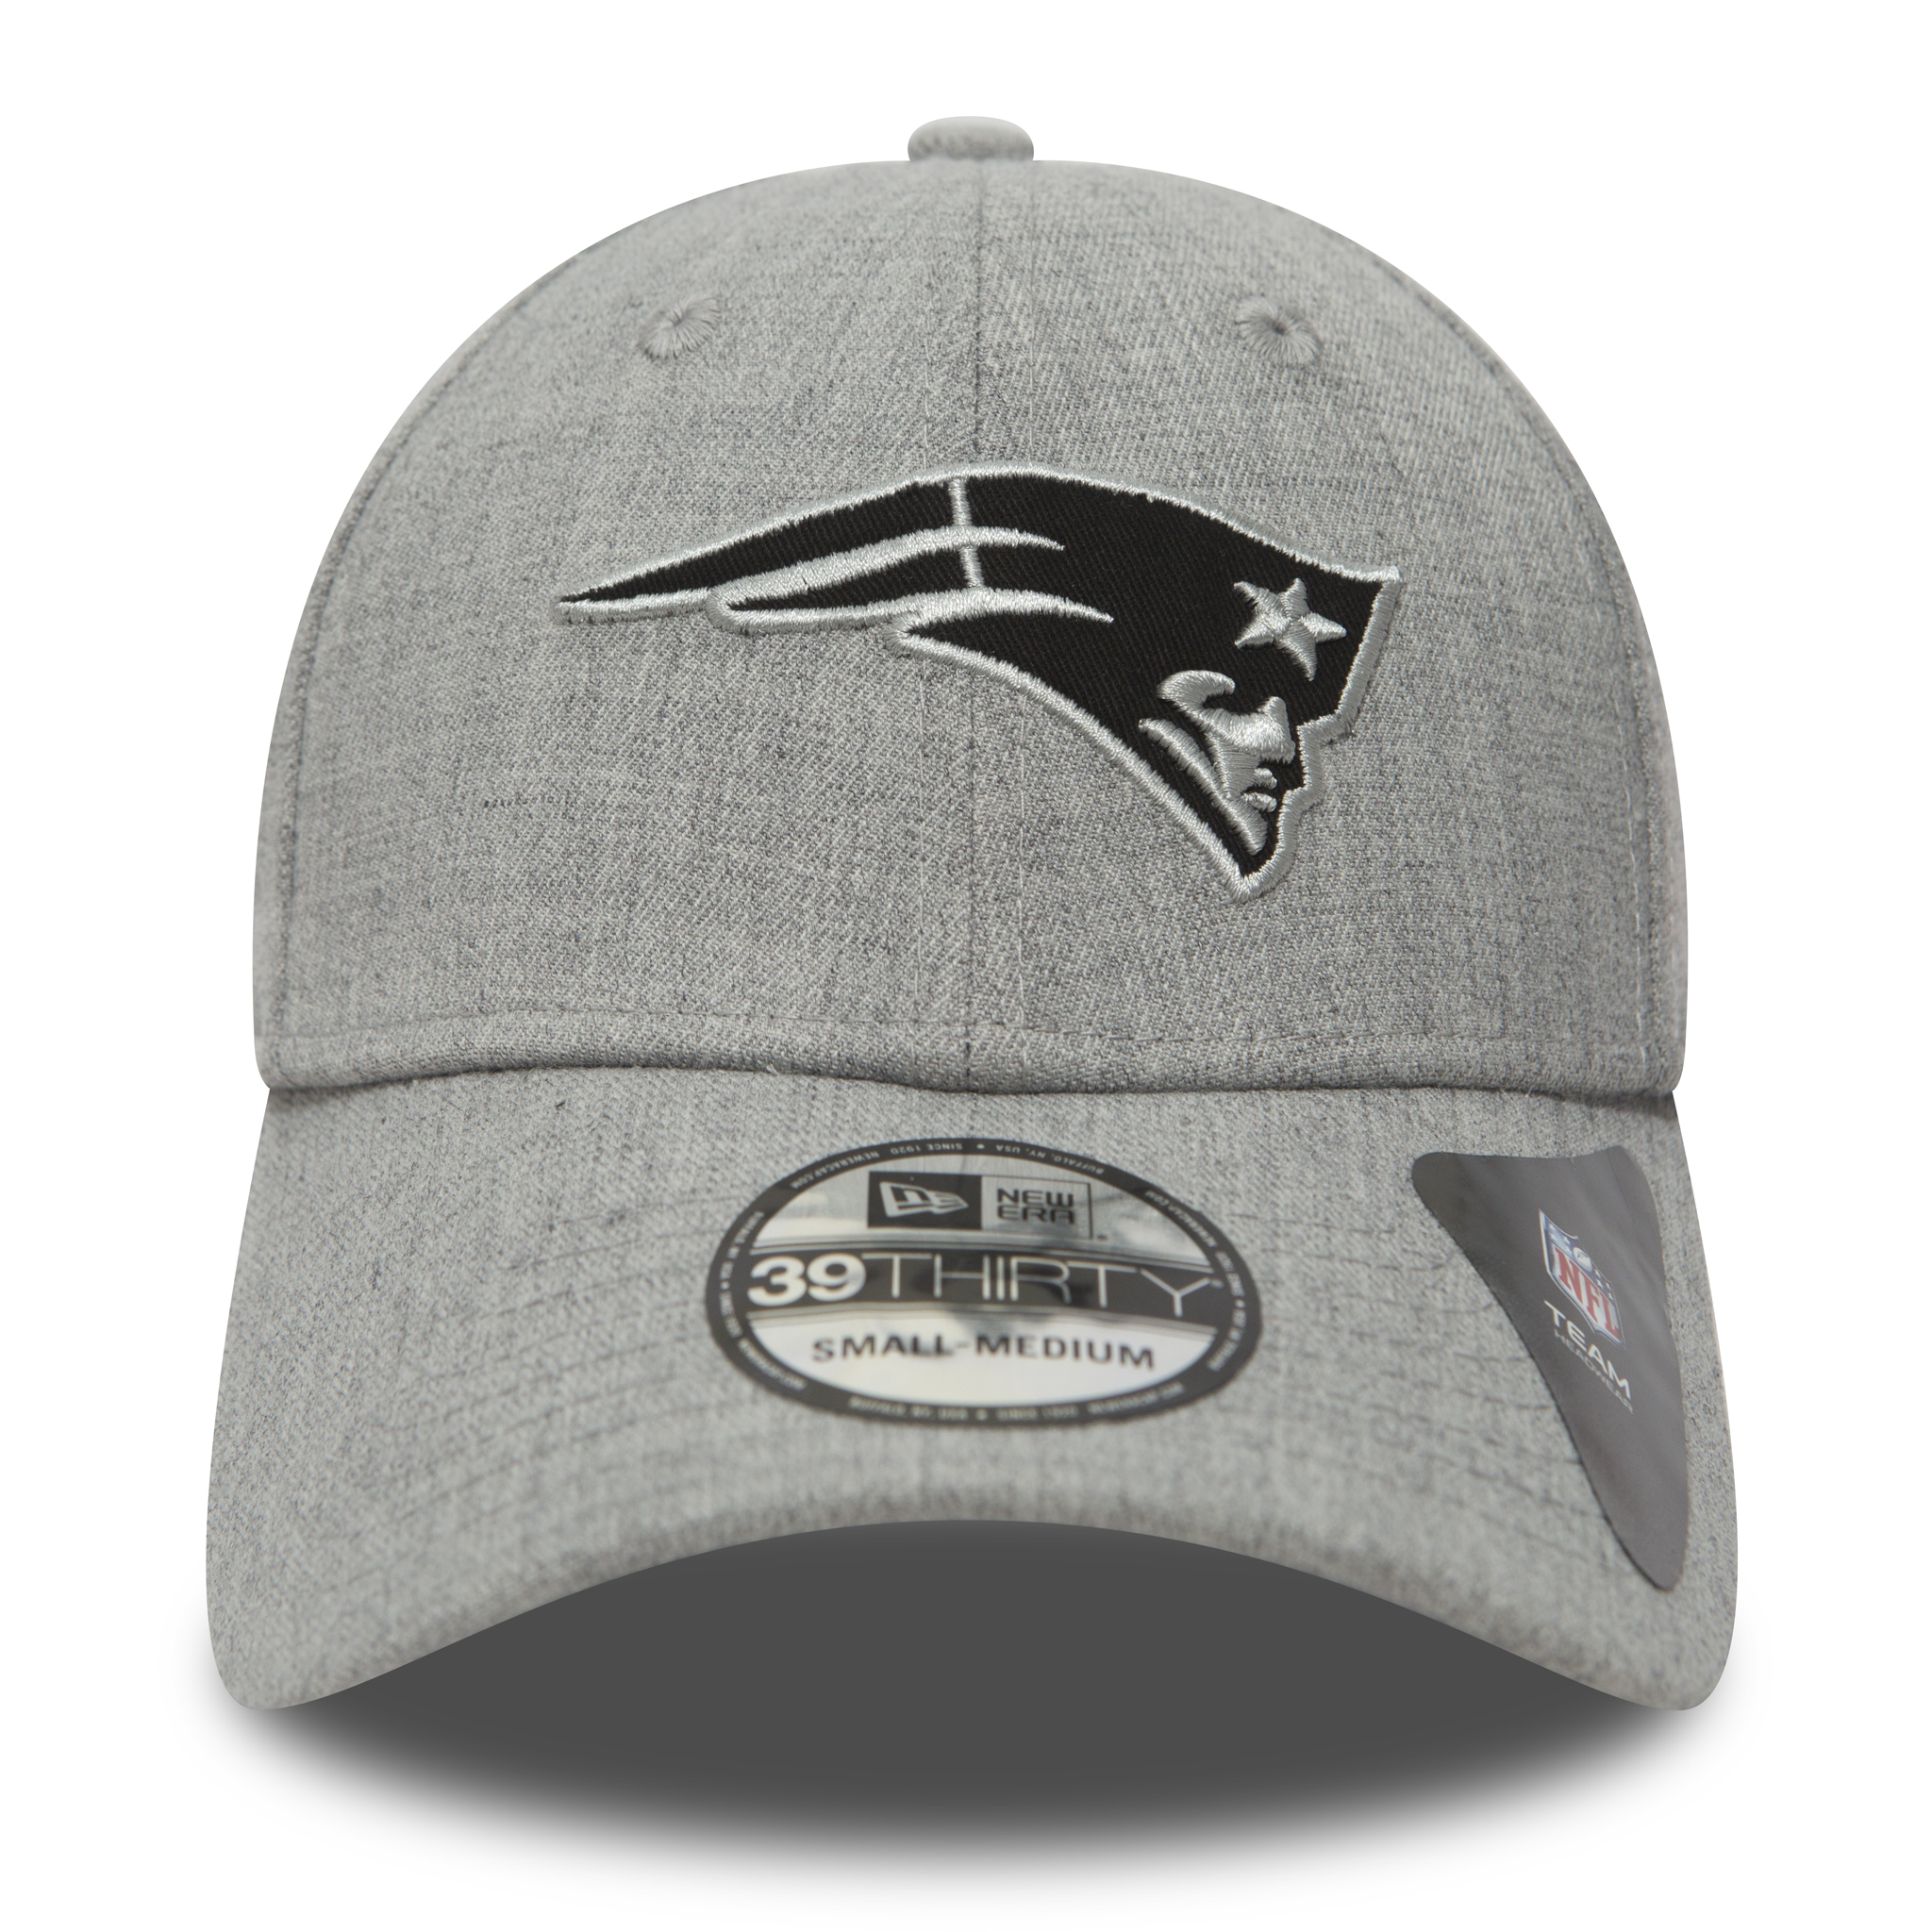 New England Patriots Heather Essential Grey 39THIRTY Cap